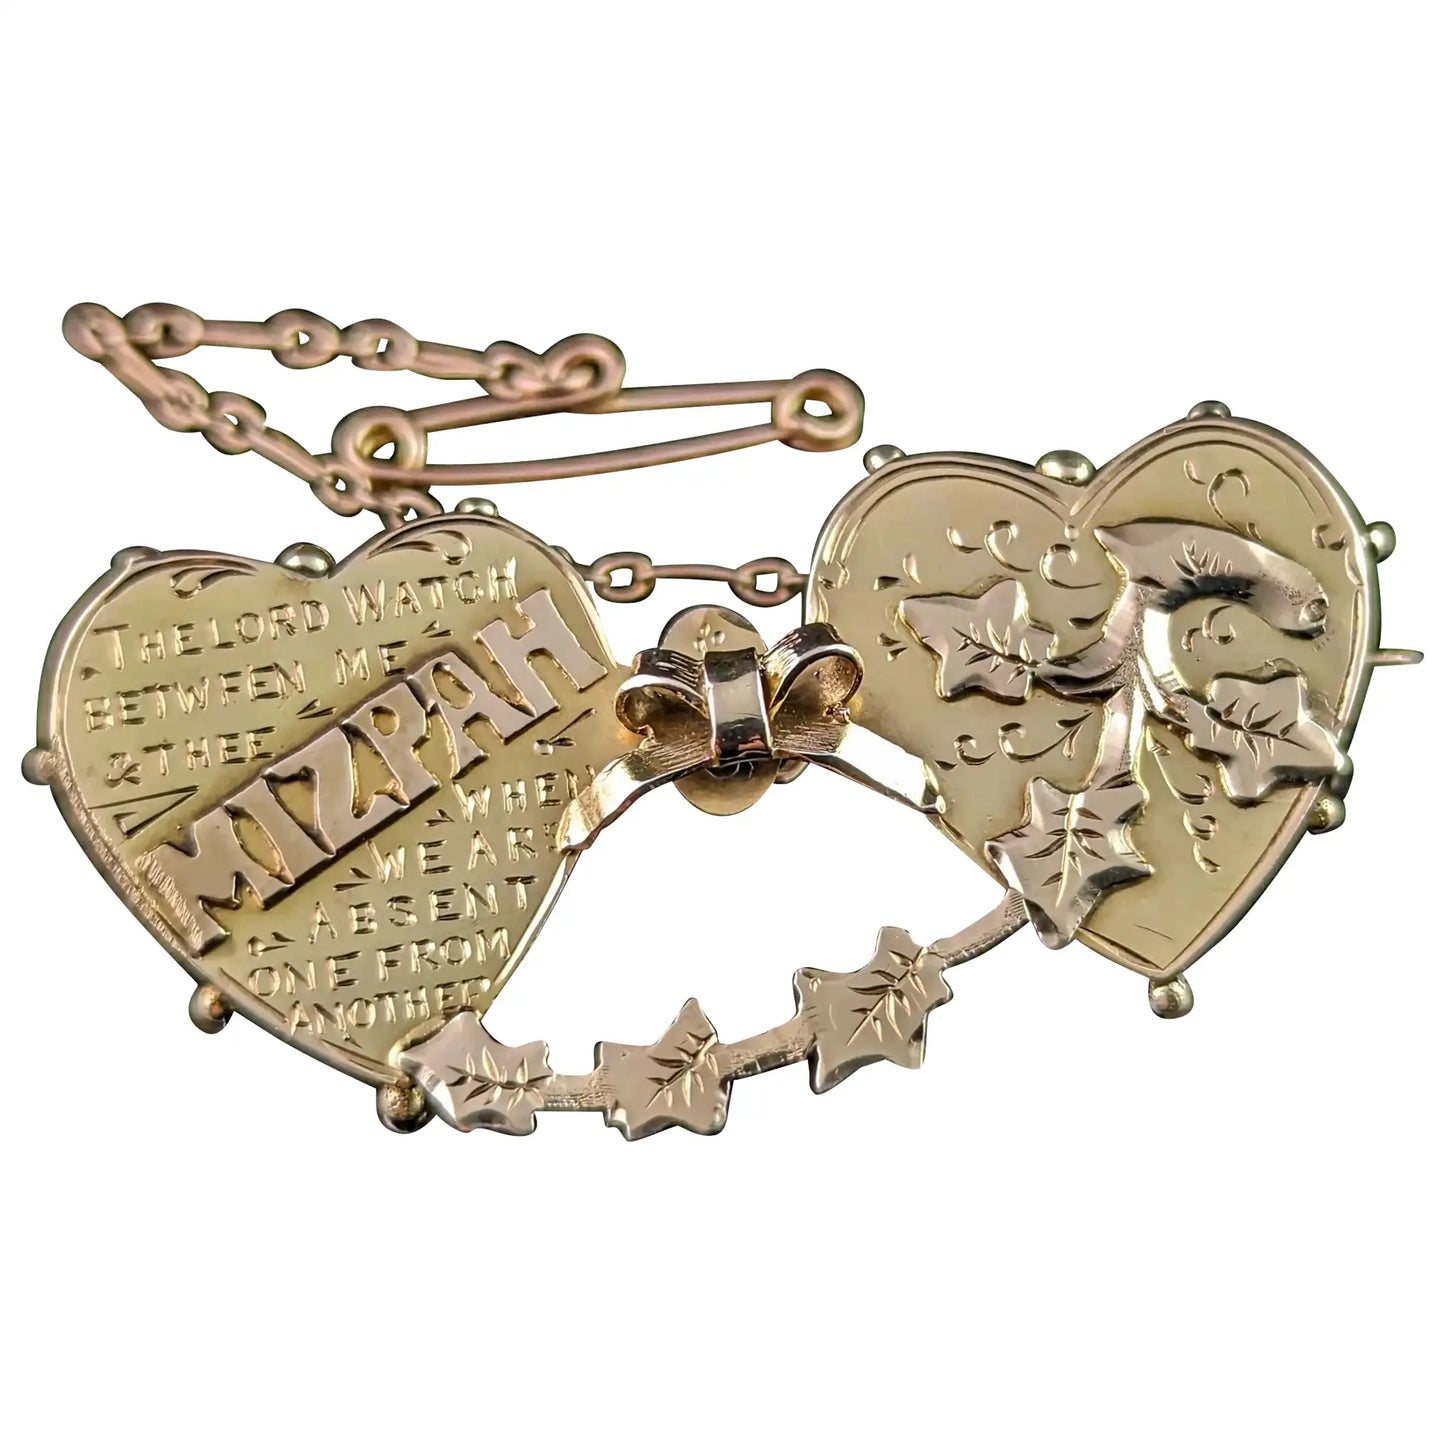 Antique 15ct gold Mizpah brooch, double heart